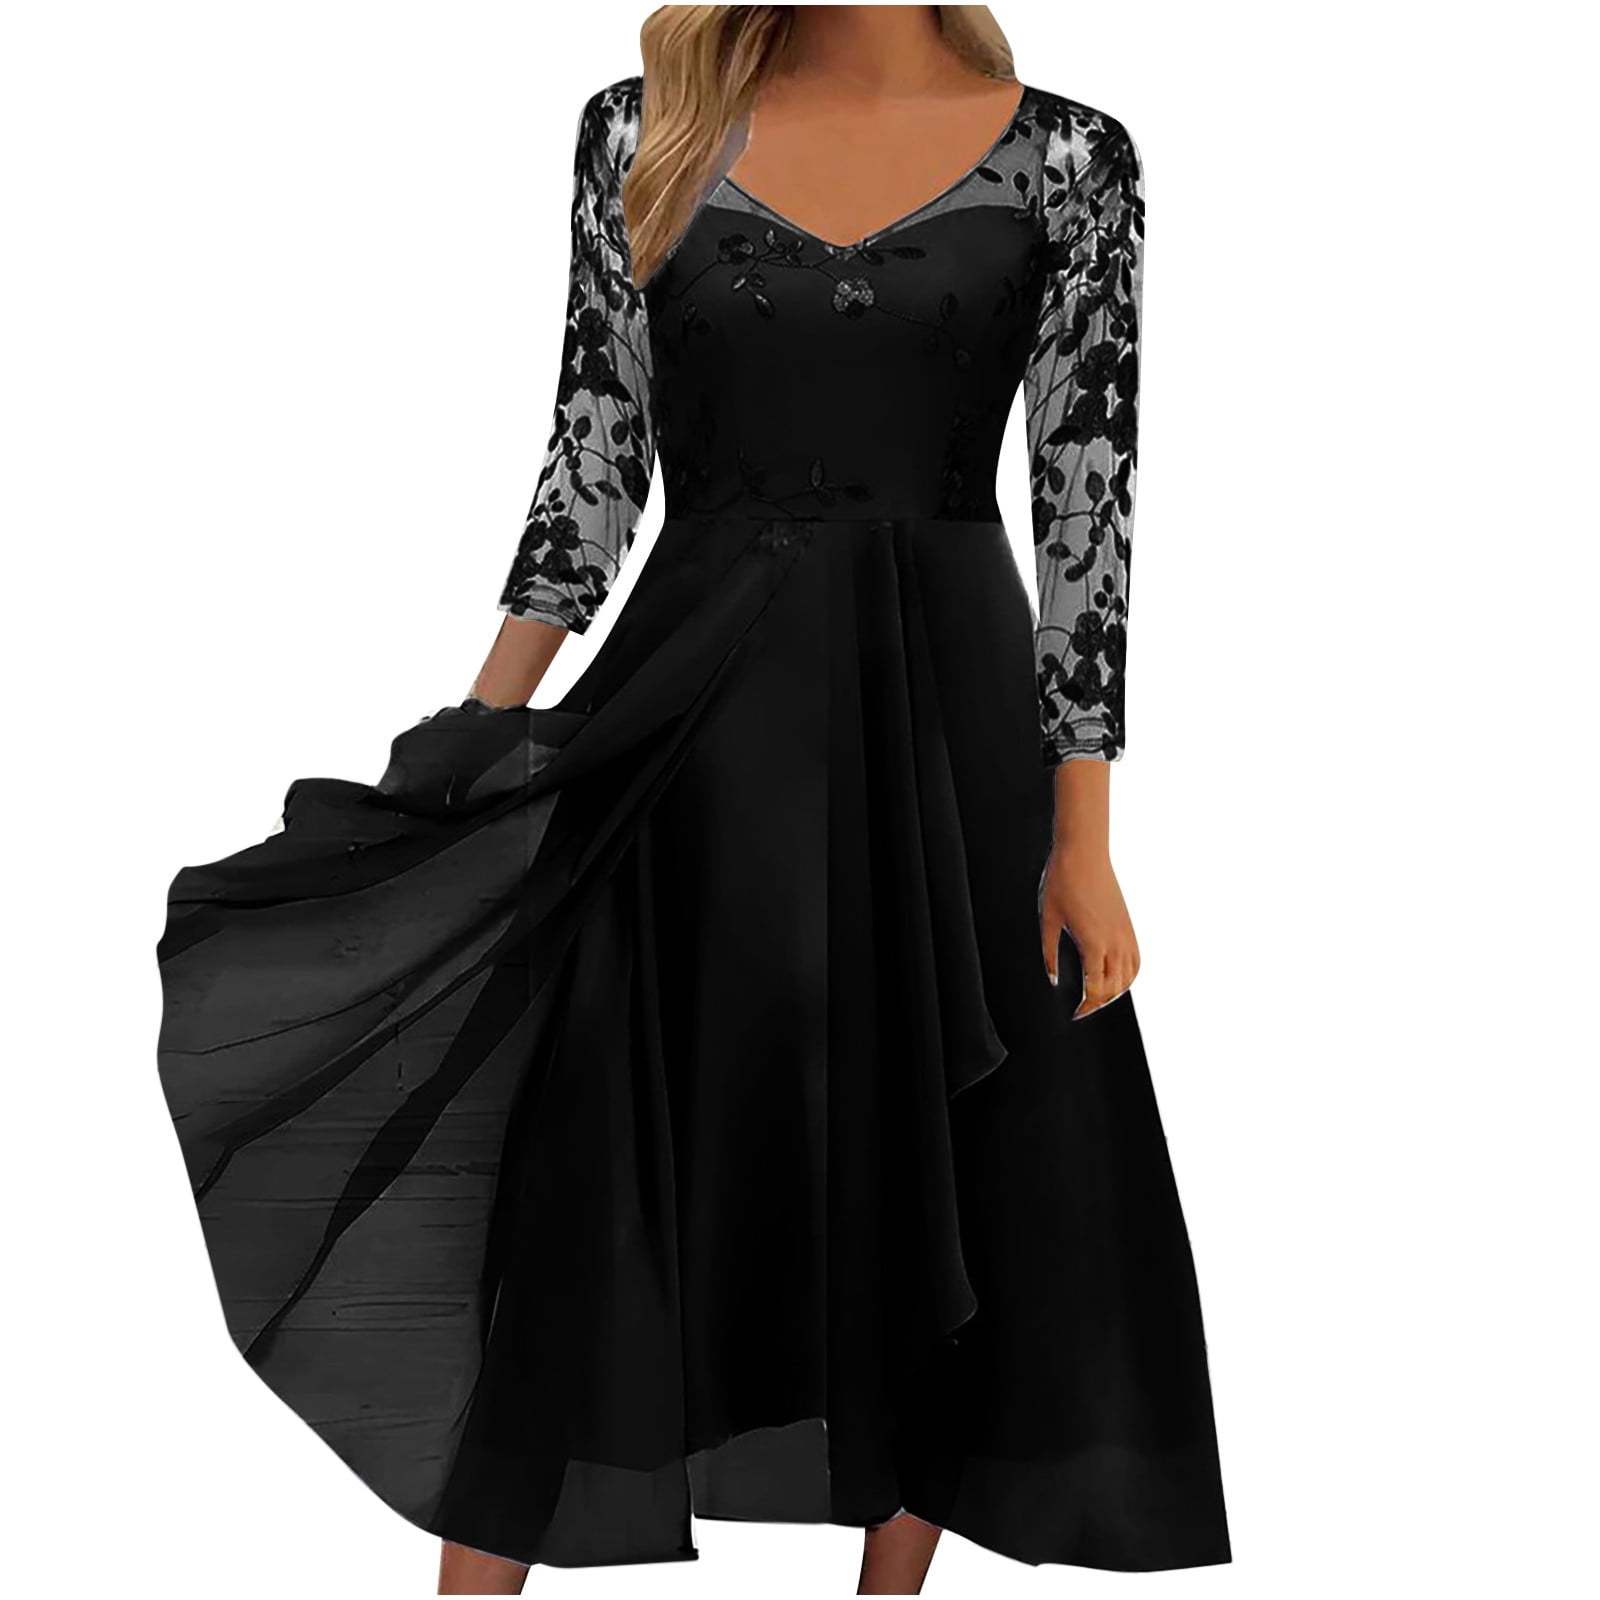 Bigersell Black Formal Dresses for Women Floral Lace V Neck 3/4 Sleeve ...